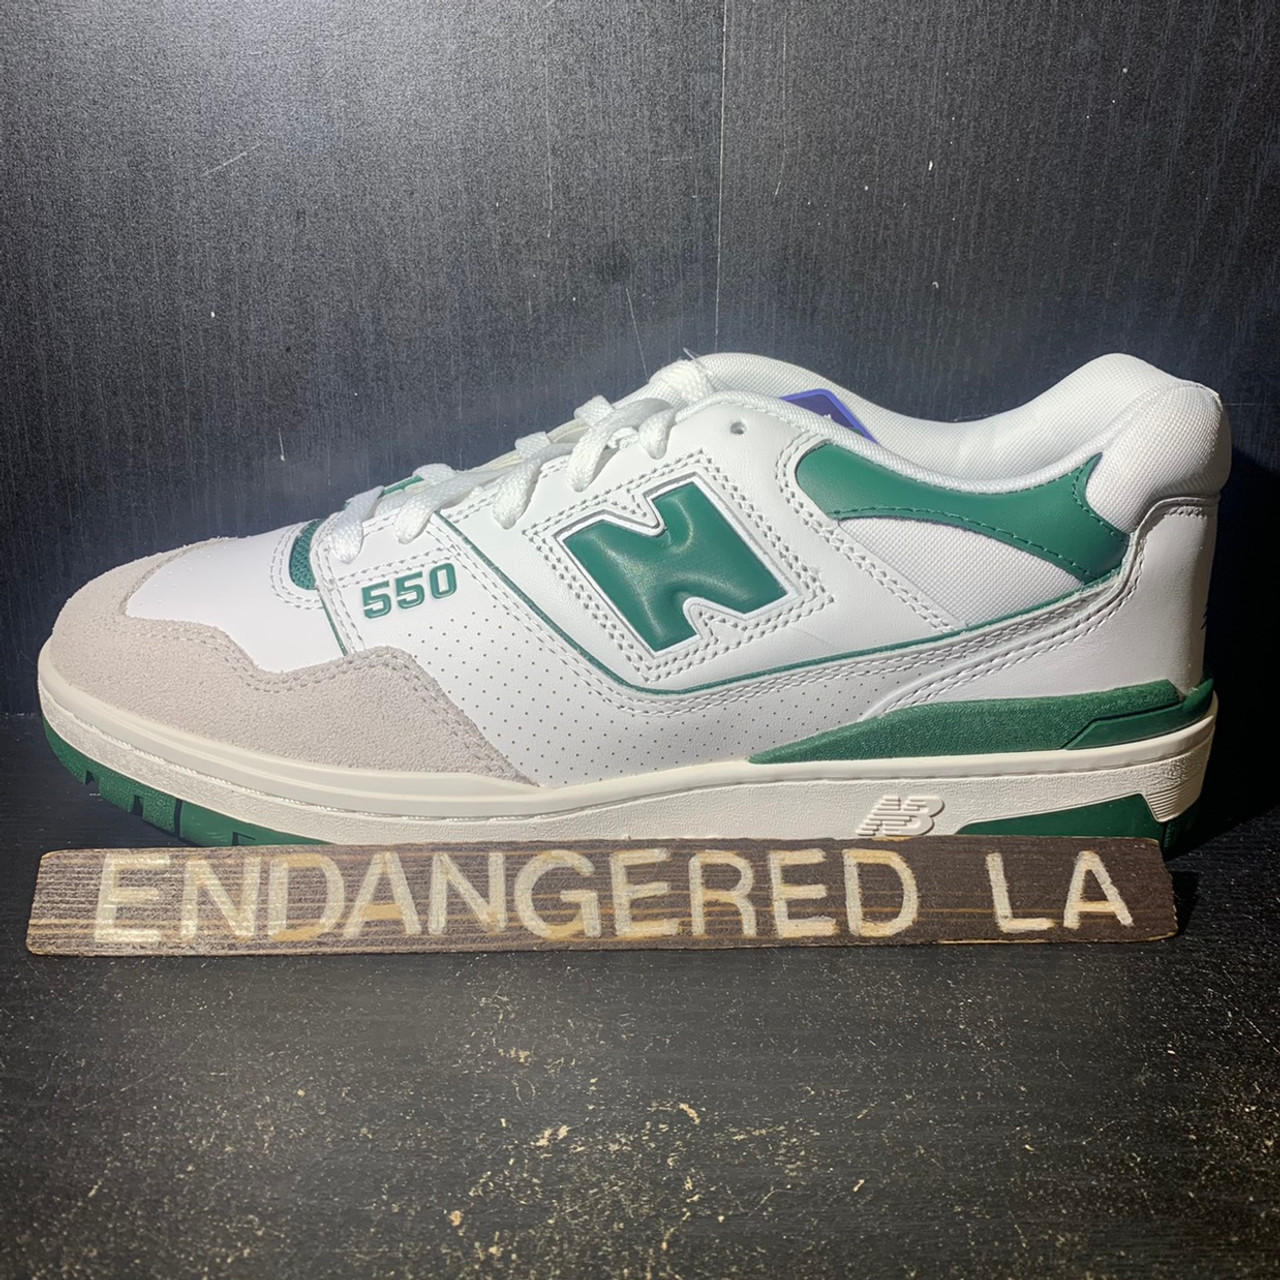 New Balance 550 White Green - ENDANGERED LA